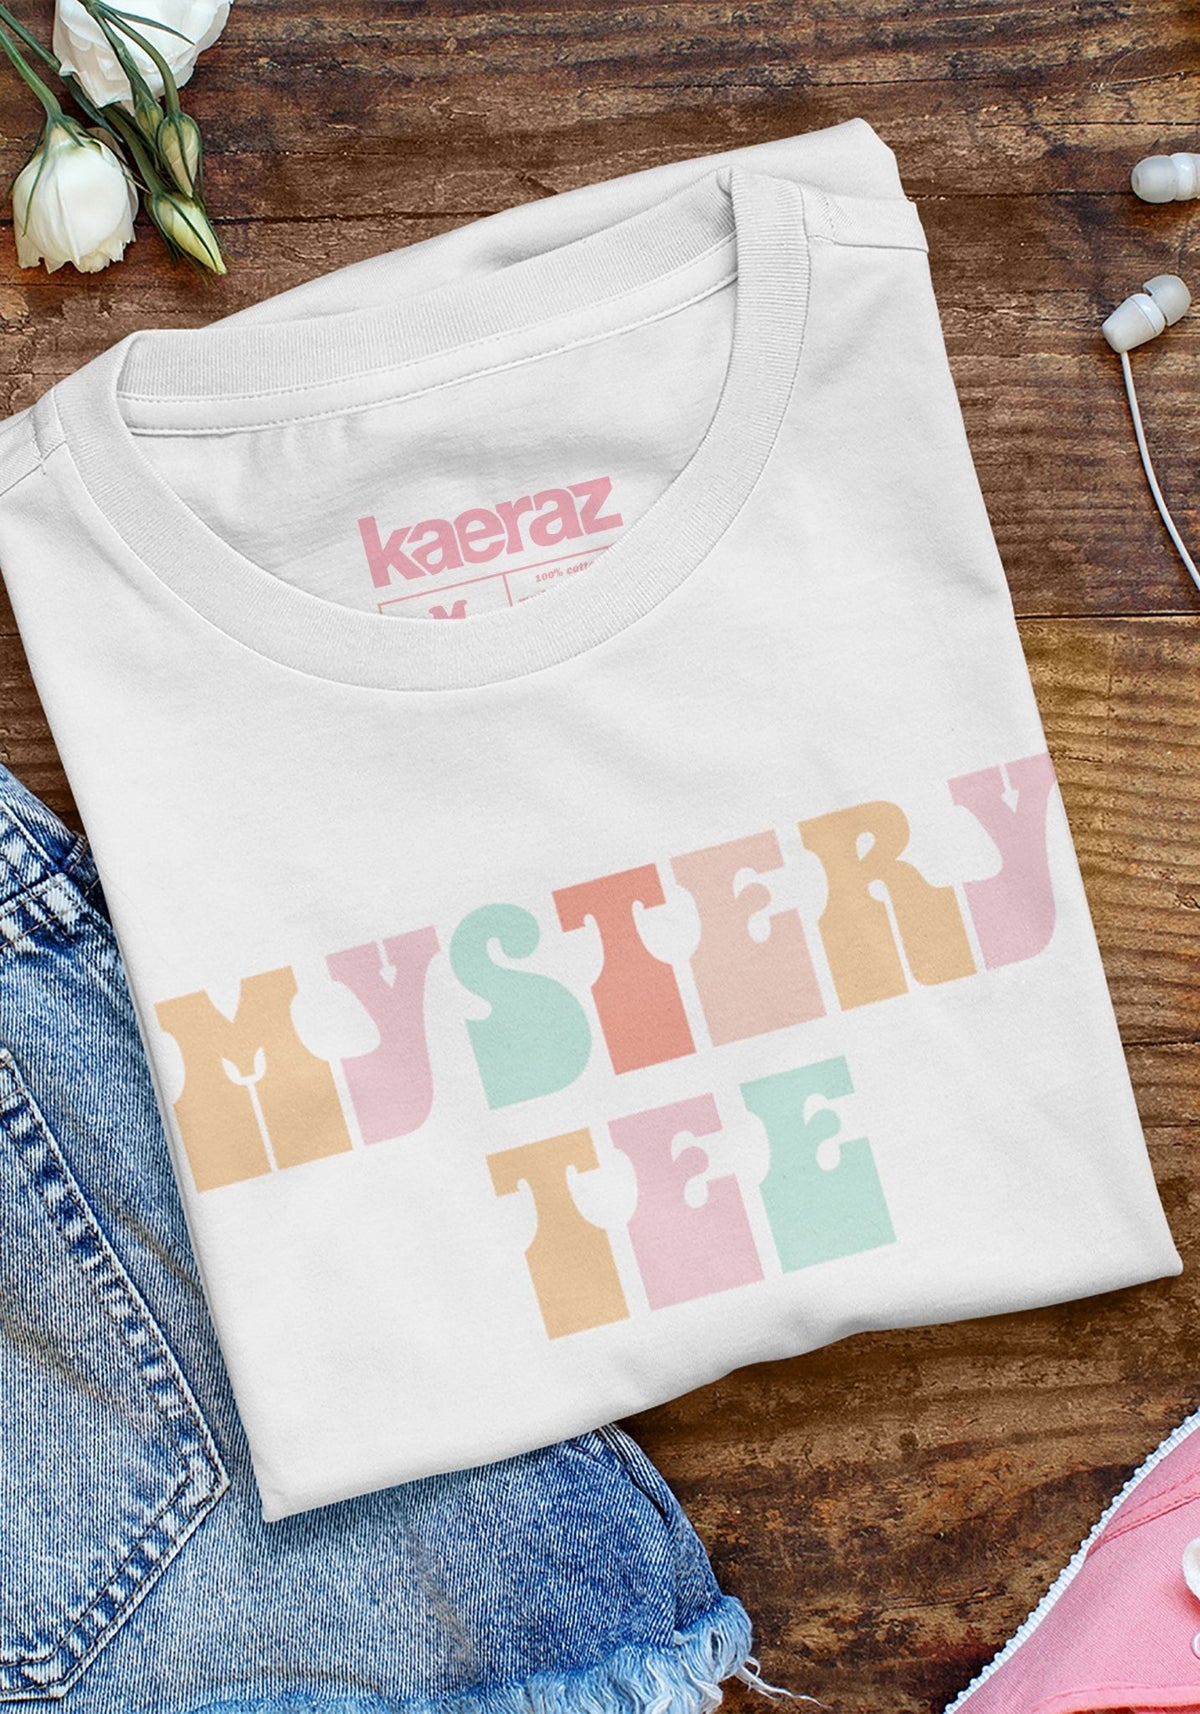 Get High in the Rockies Tee by kaeraz, Souvenir Travel Tshirts for Women